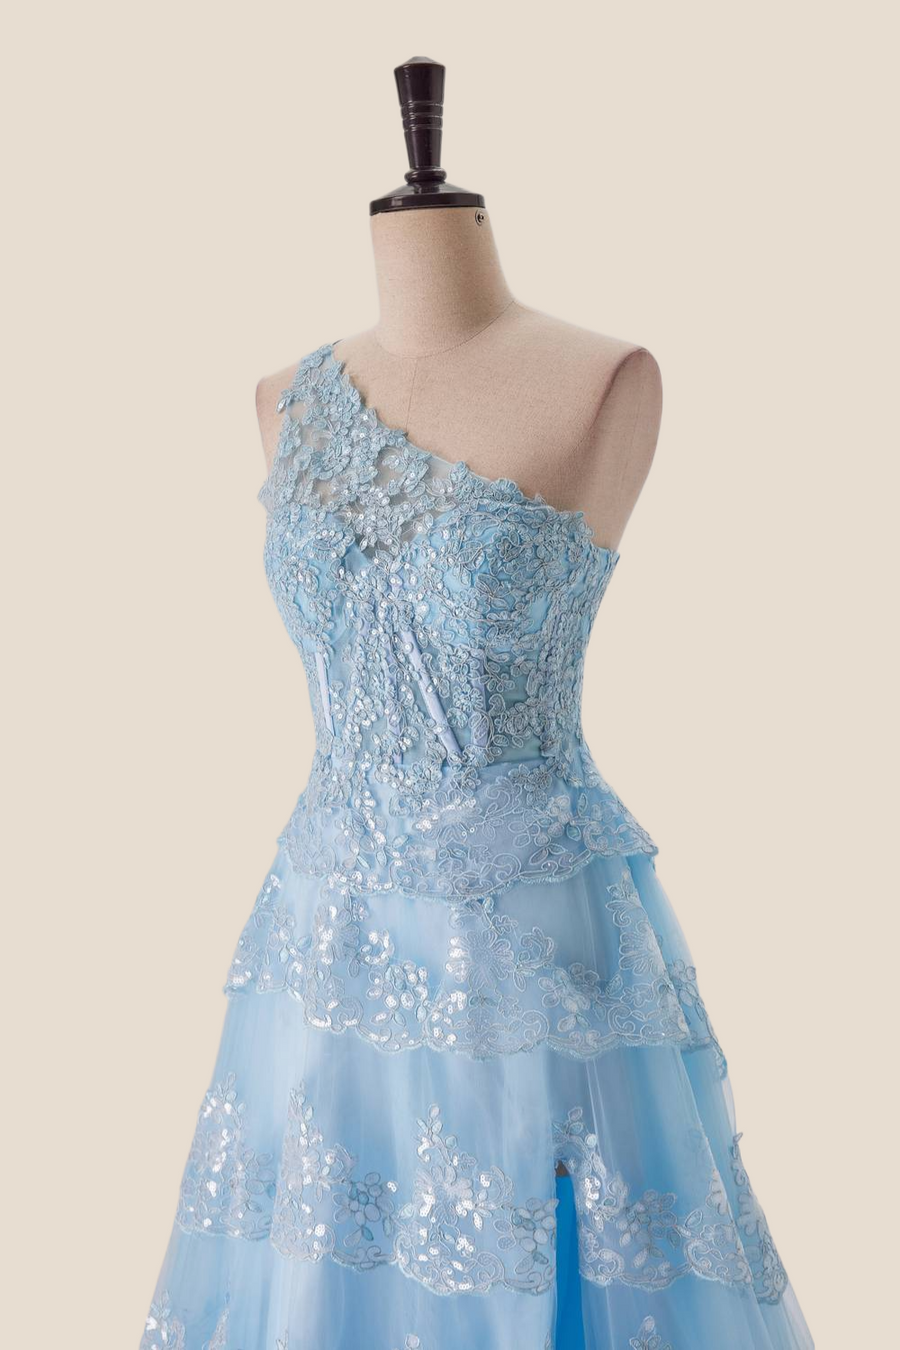 One Shoulder Light Blue Appliques Ruffle Formal Dress